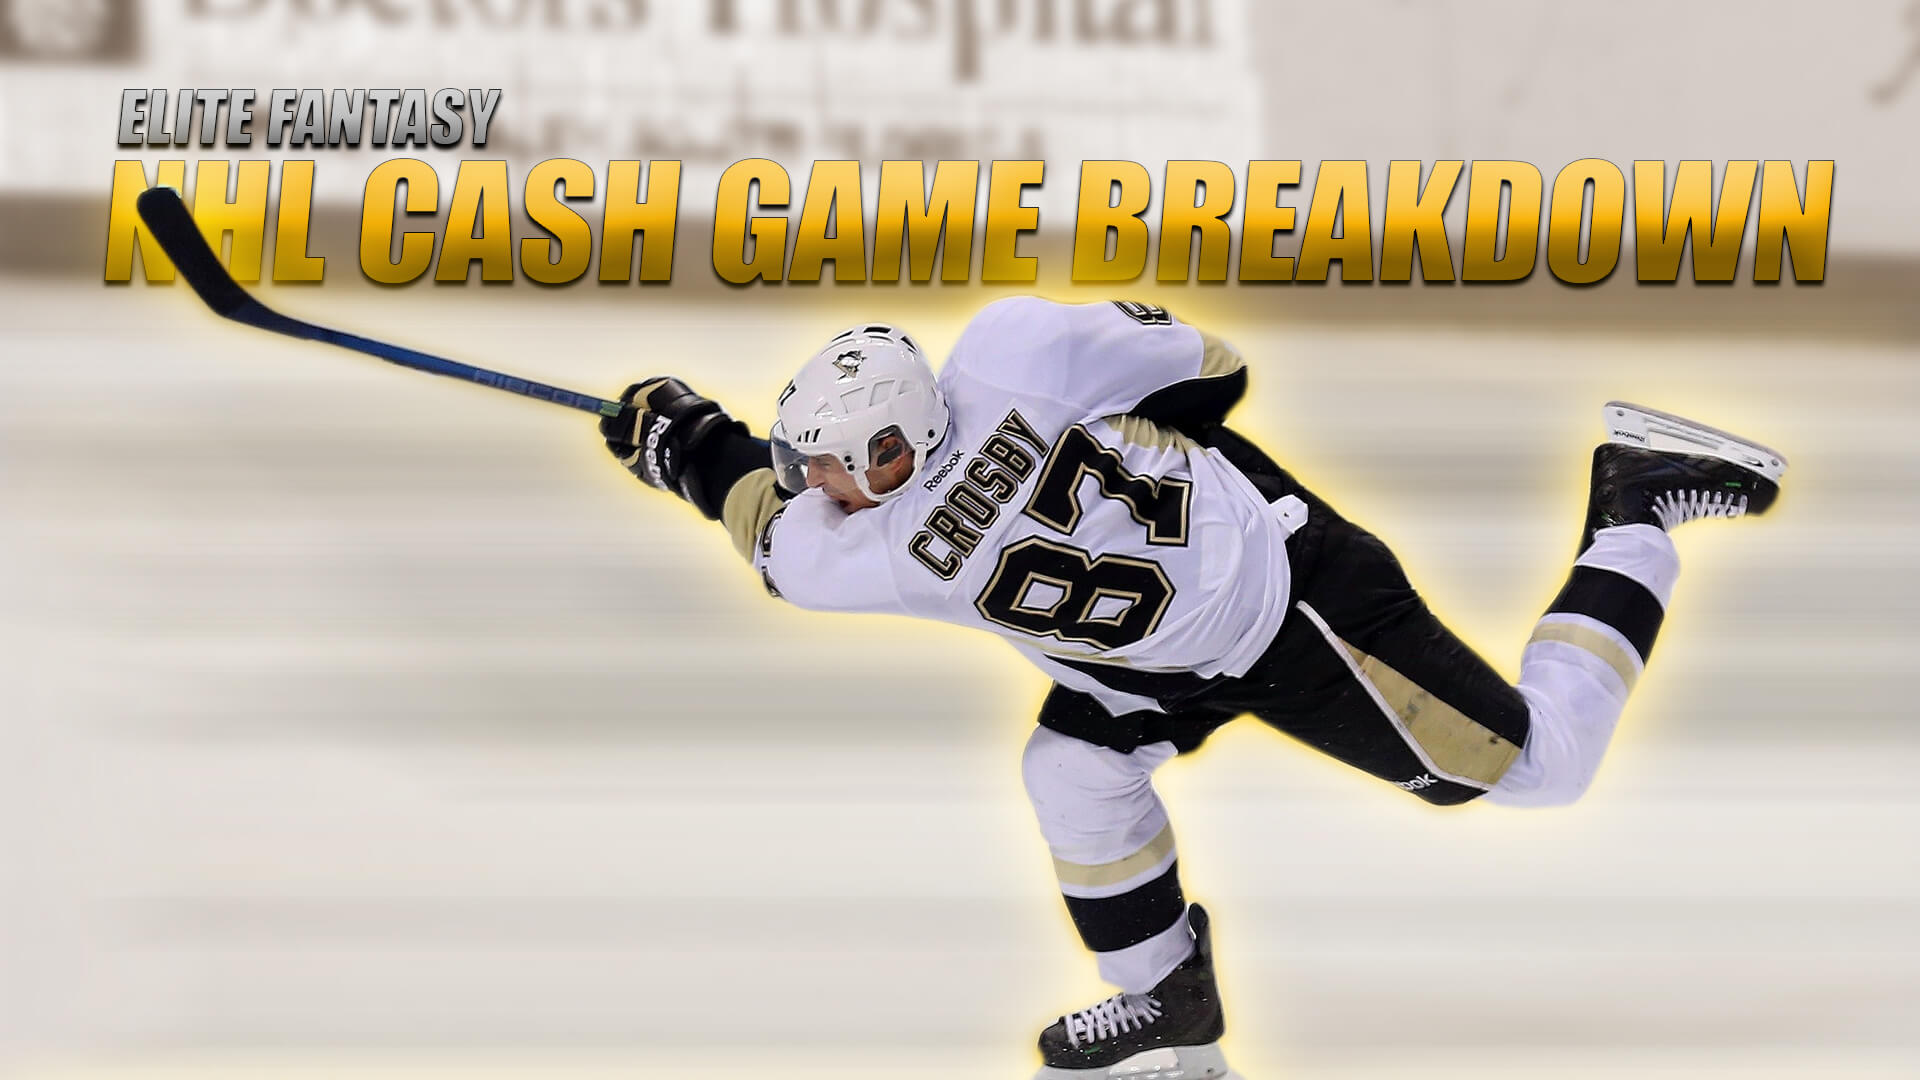 NHL Cash Game Breakdown Logo